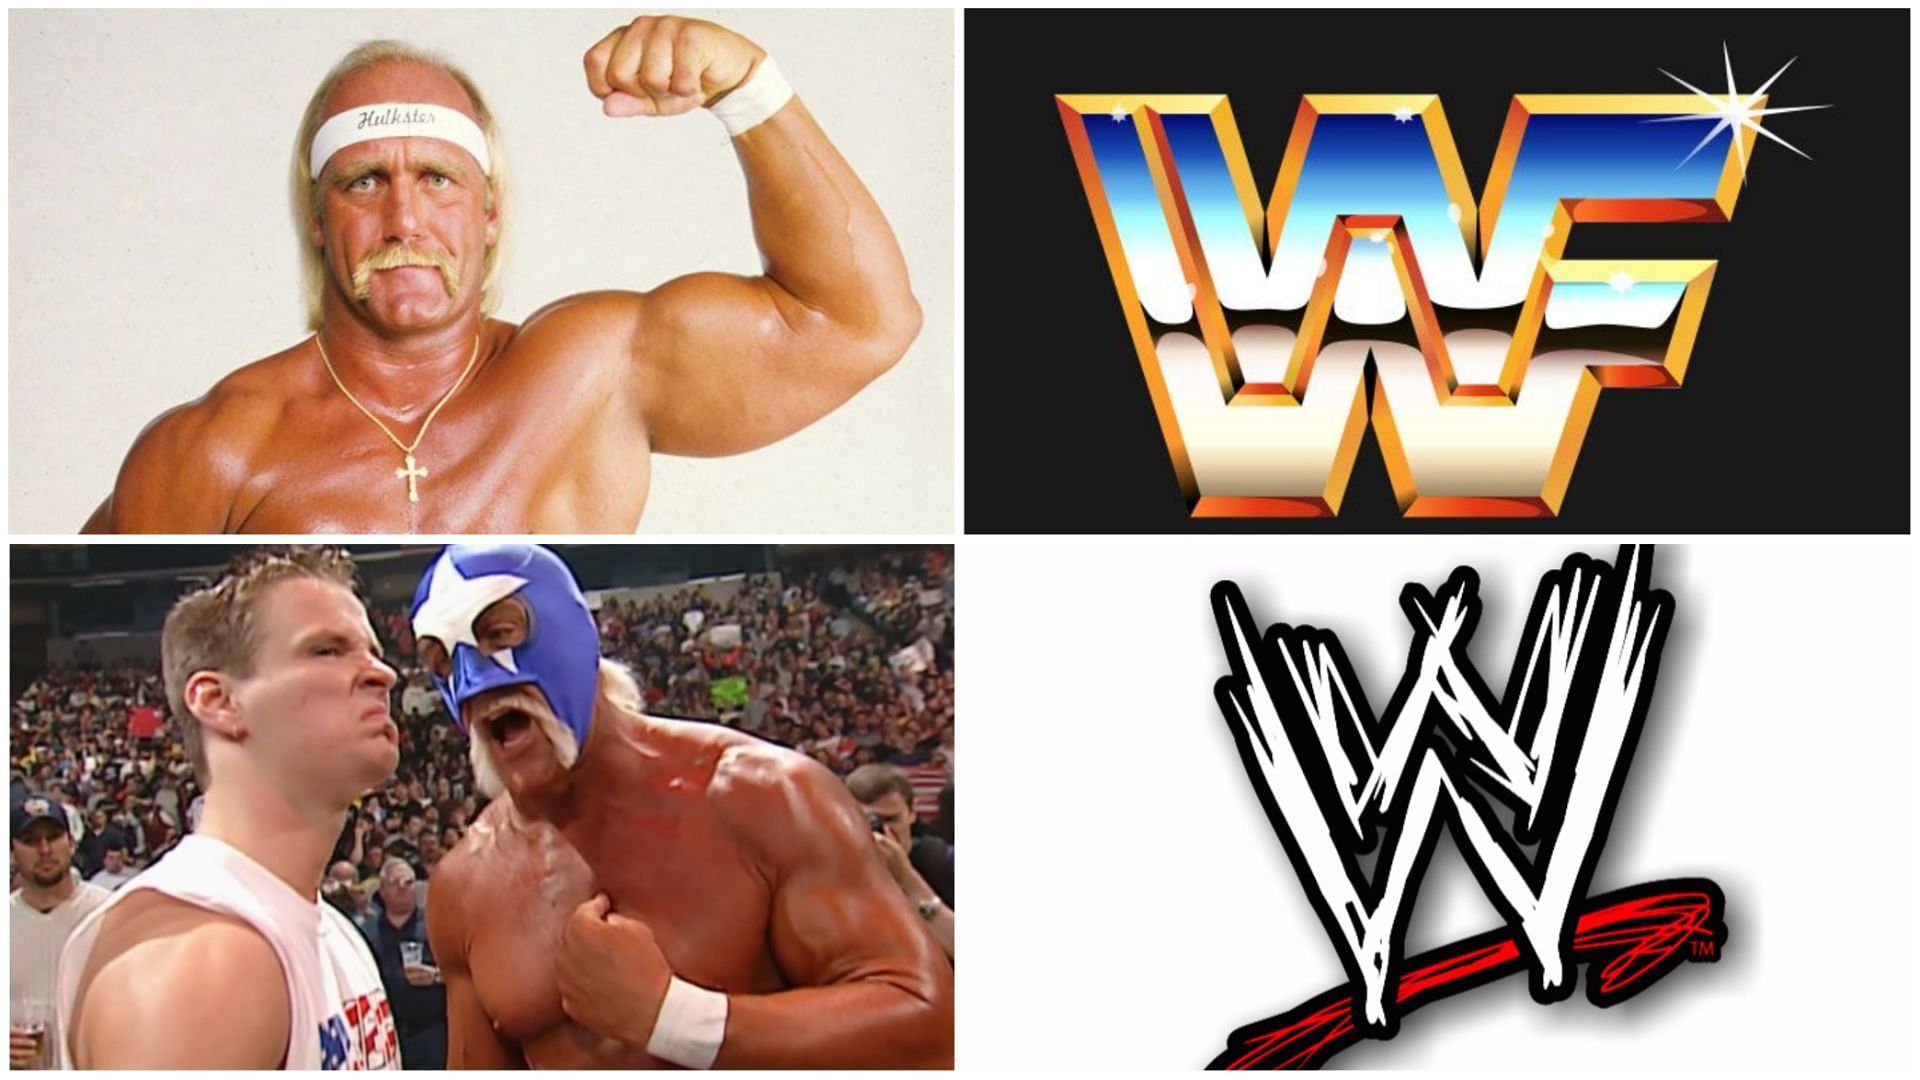 Hulk Hogan is synonymous with WWE